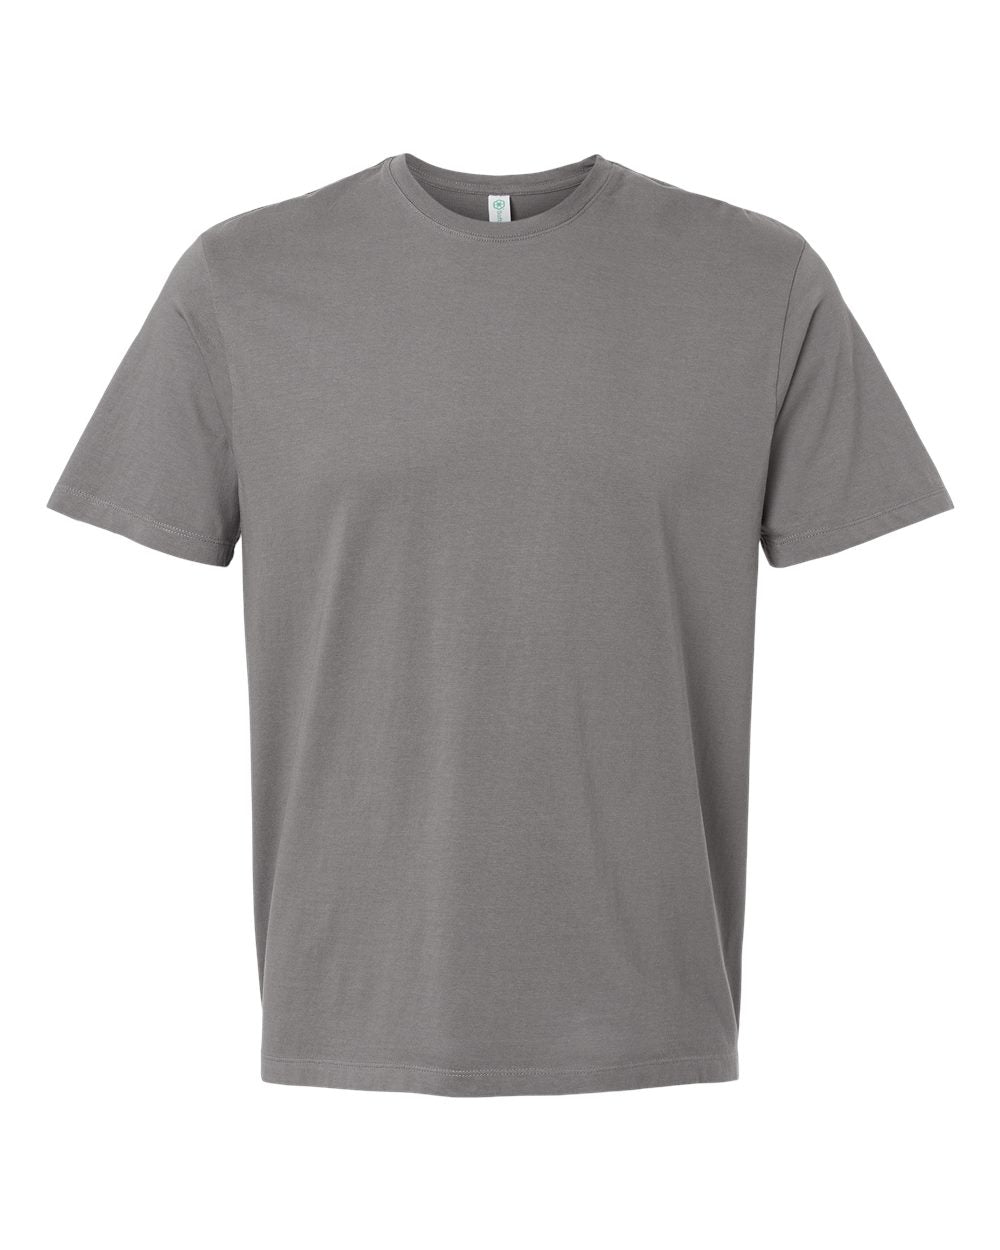 Softshirts® Unisex Organic Cotton T-shirt in gray